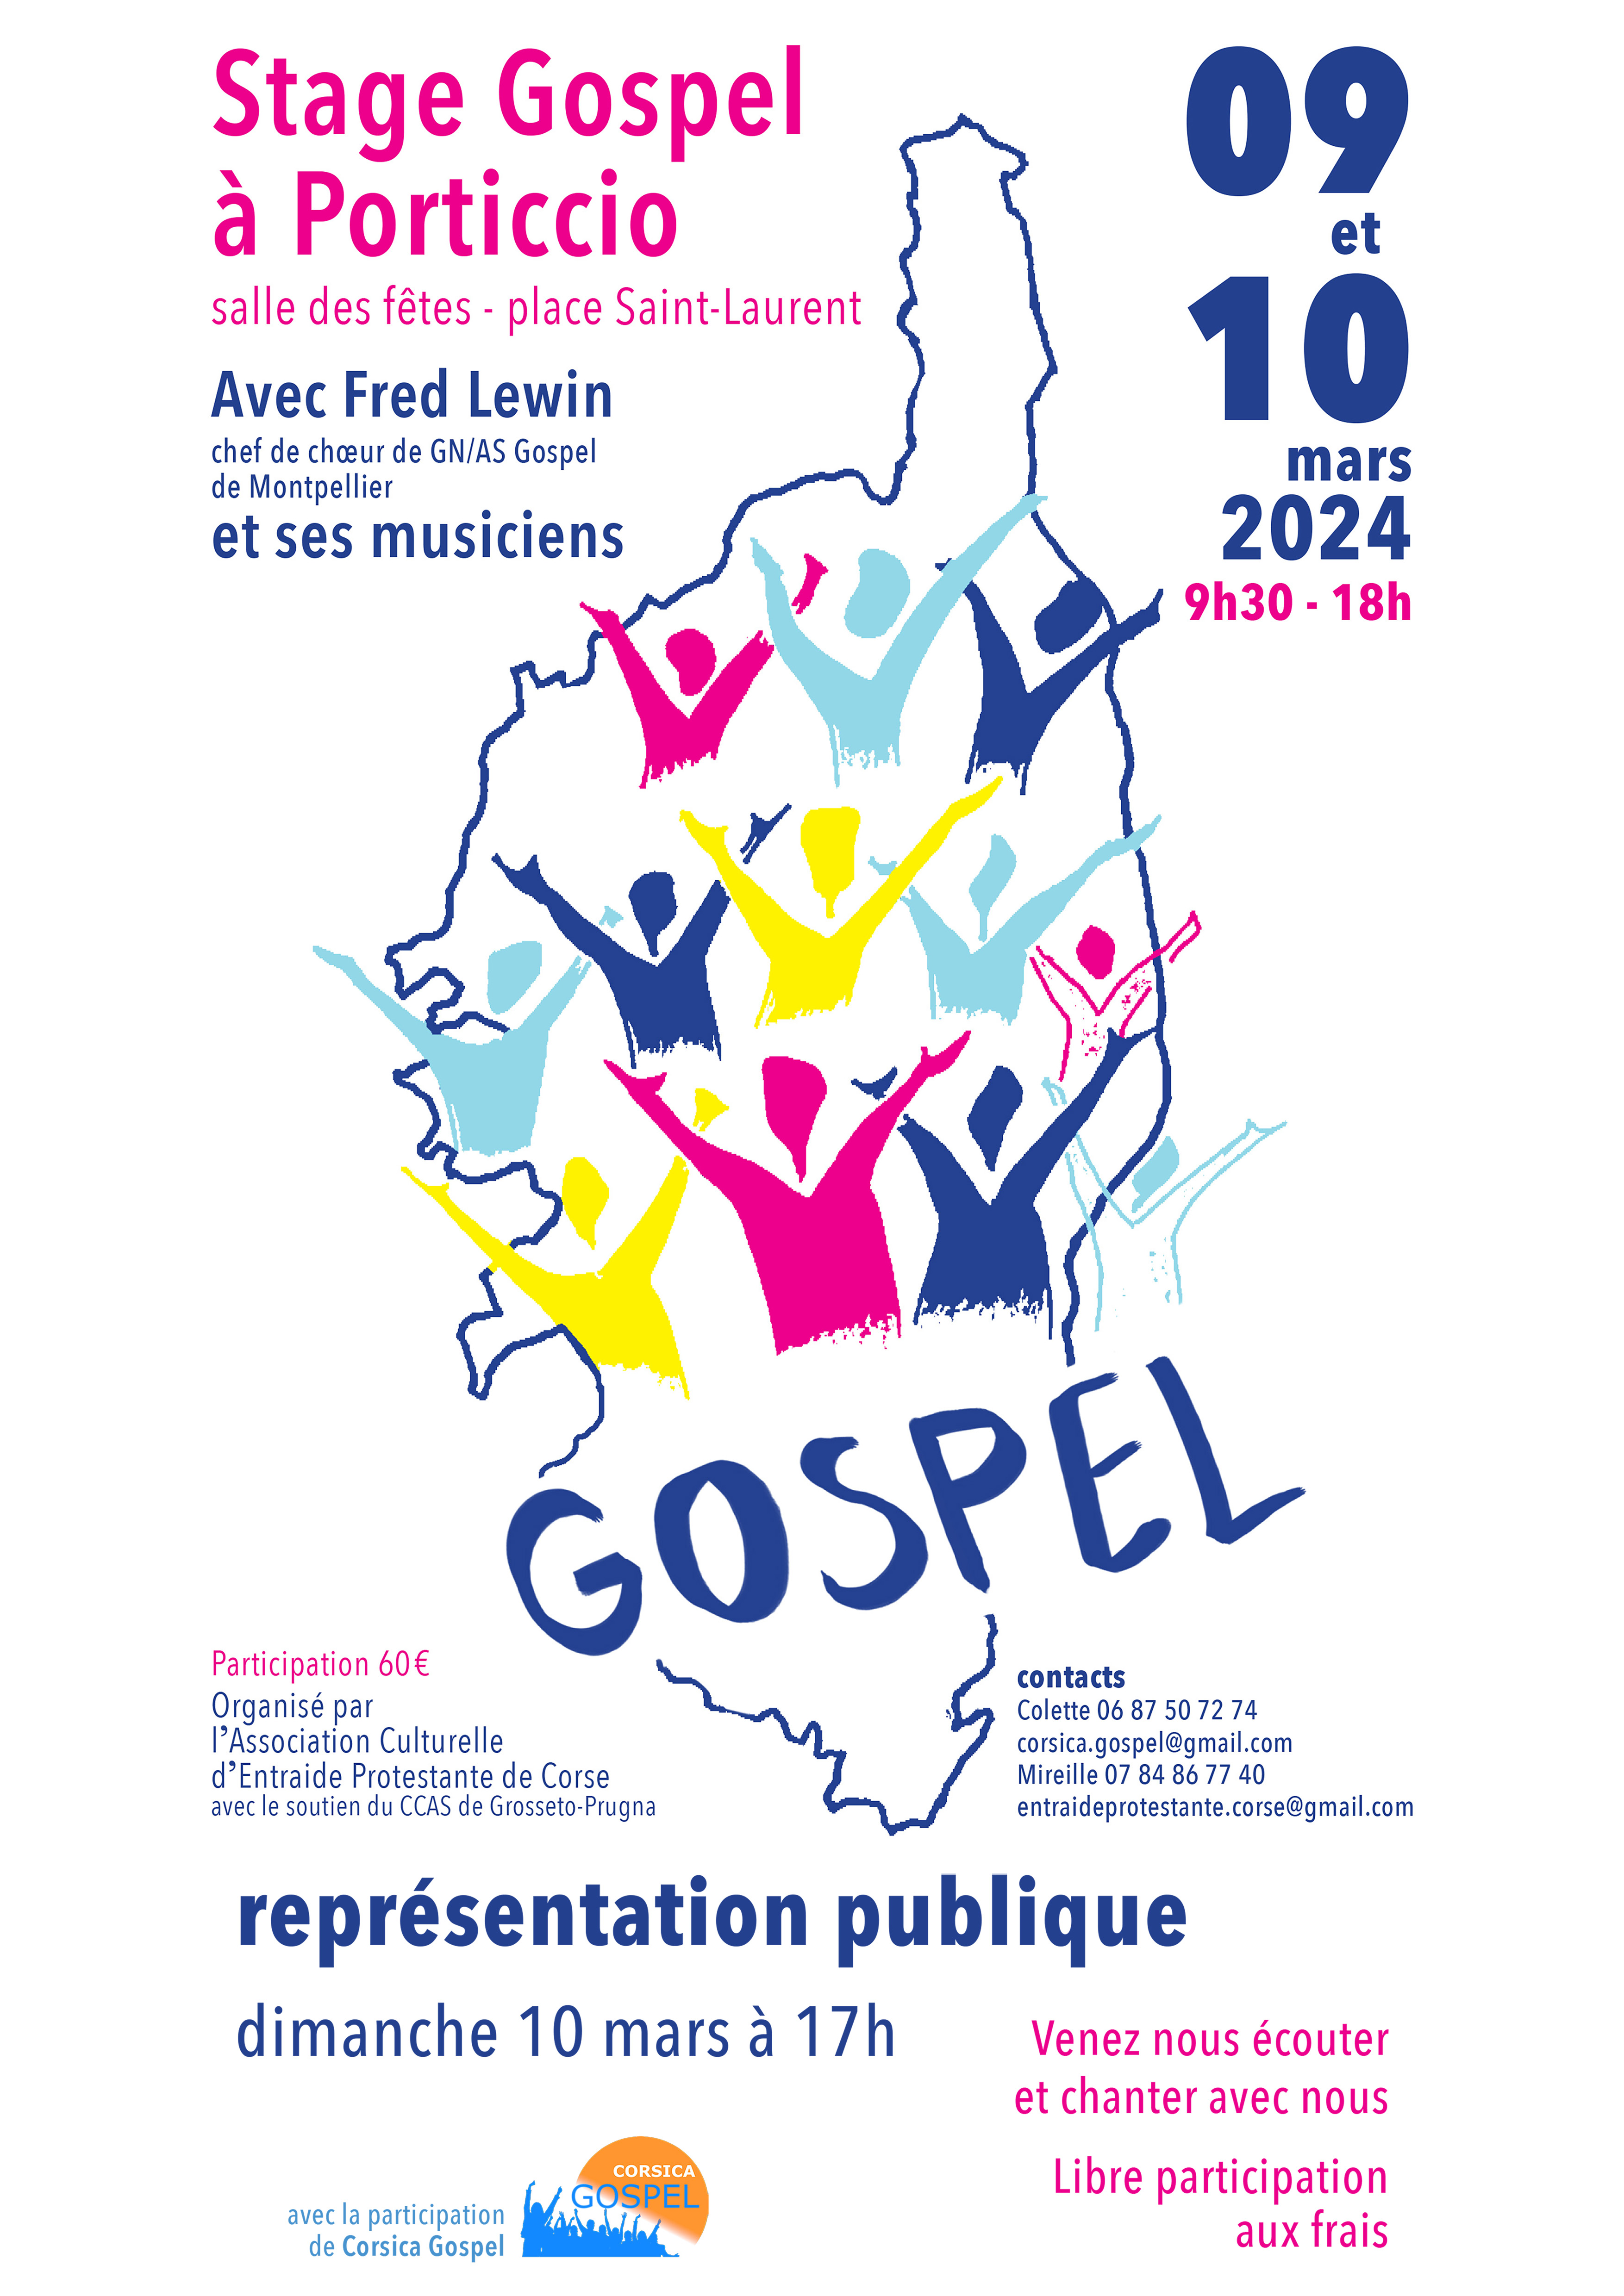 Gospel course in Porticcio Saturday 9 & Sunday 10 March